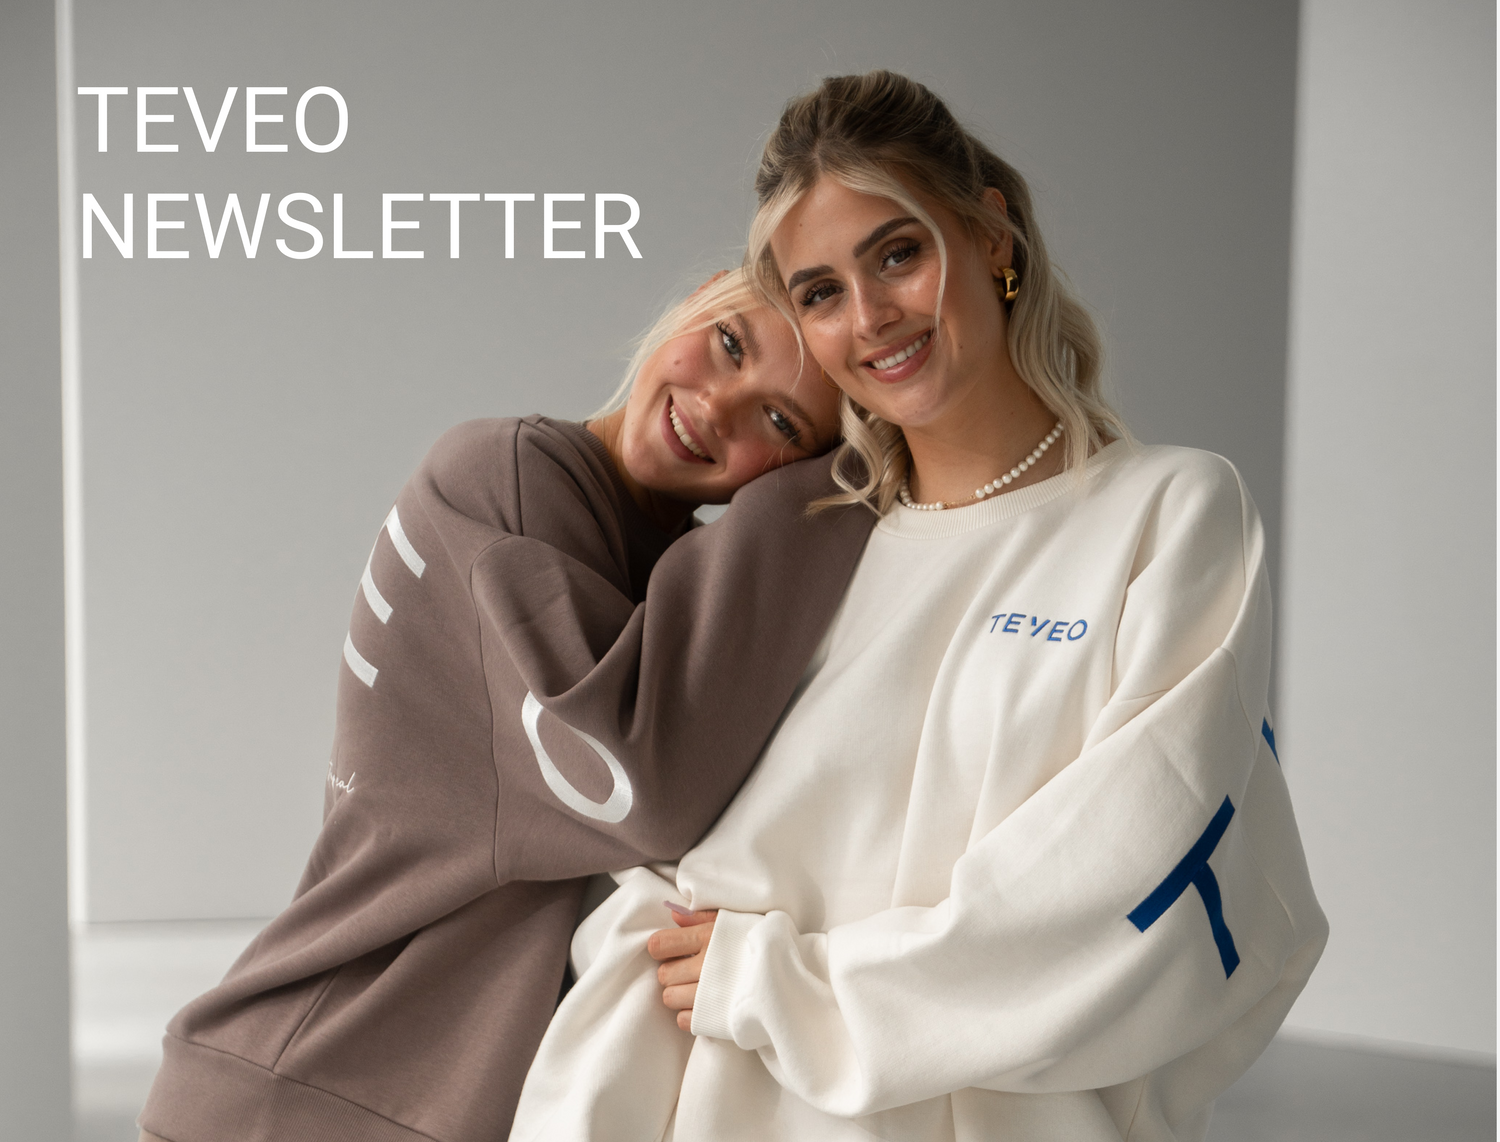 TEVEO newsletter - TEVEO Official Store